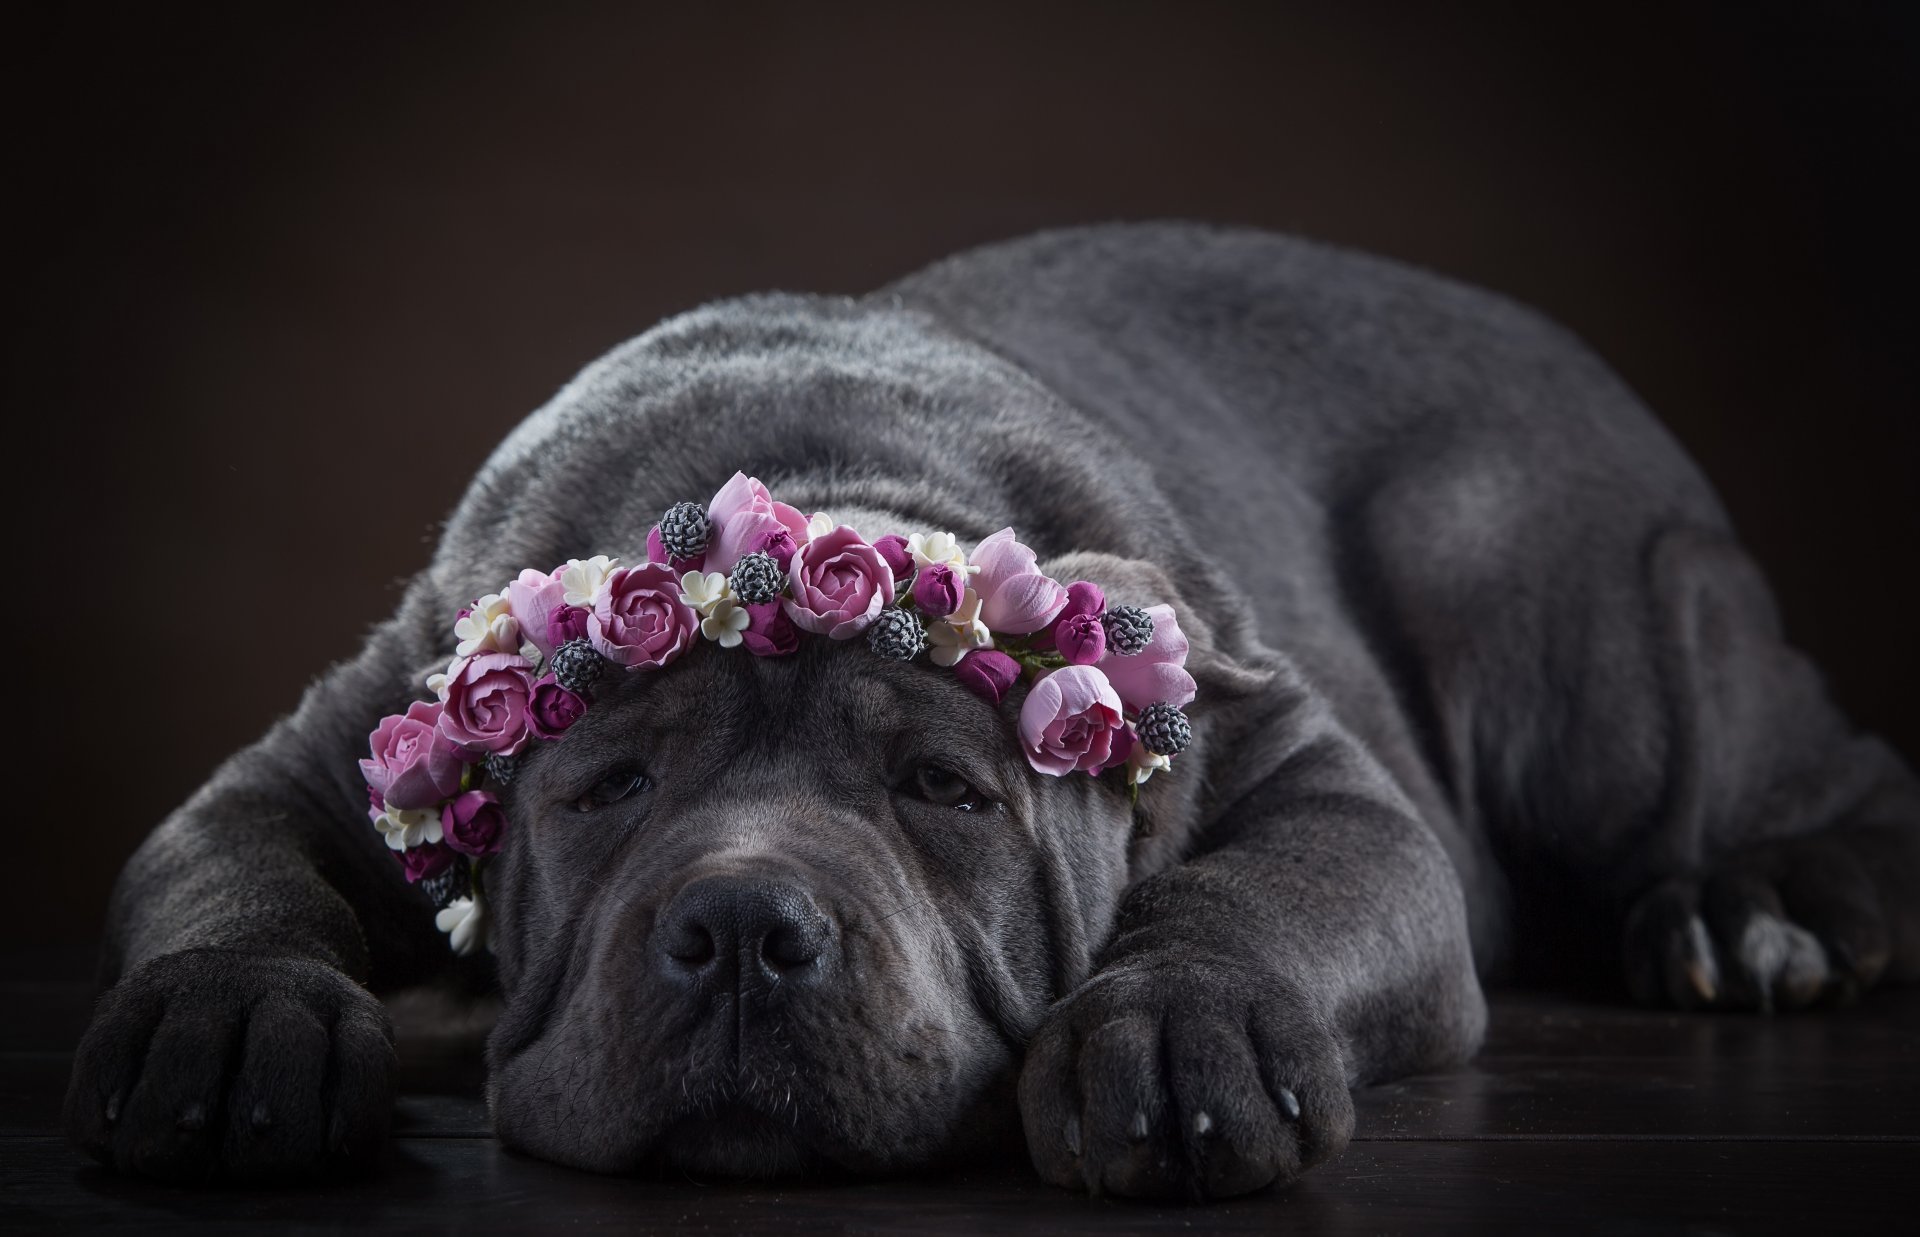 Cane Corso Dog Face Wreath Flower - Обои На Рабочий Стол Кане Корсо , HD Wallpaper & Backgrounds